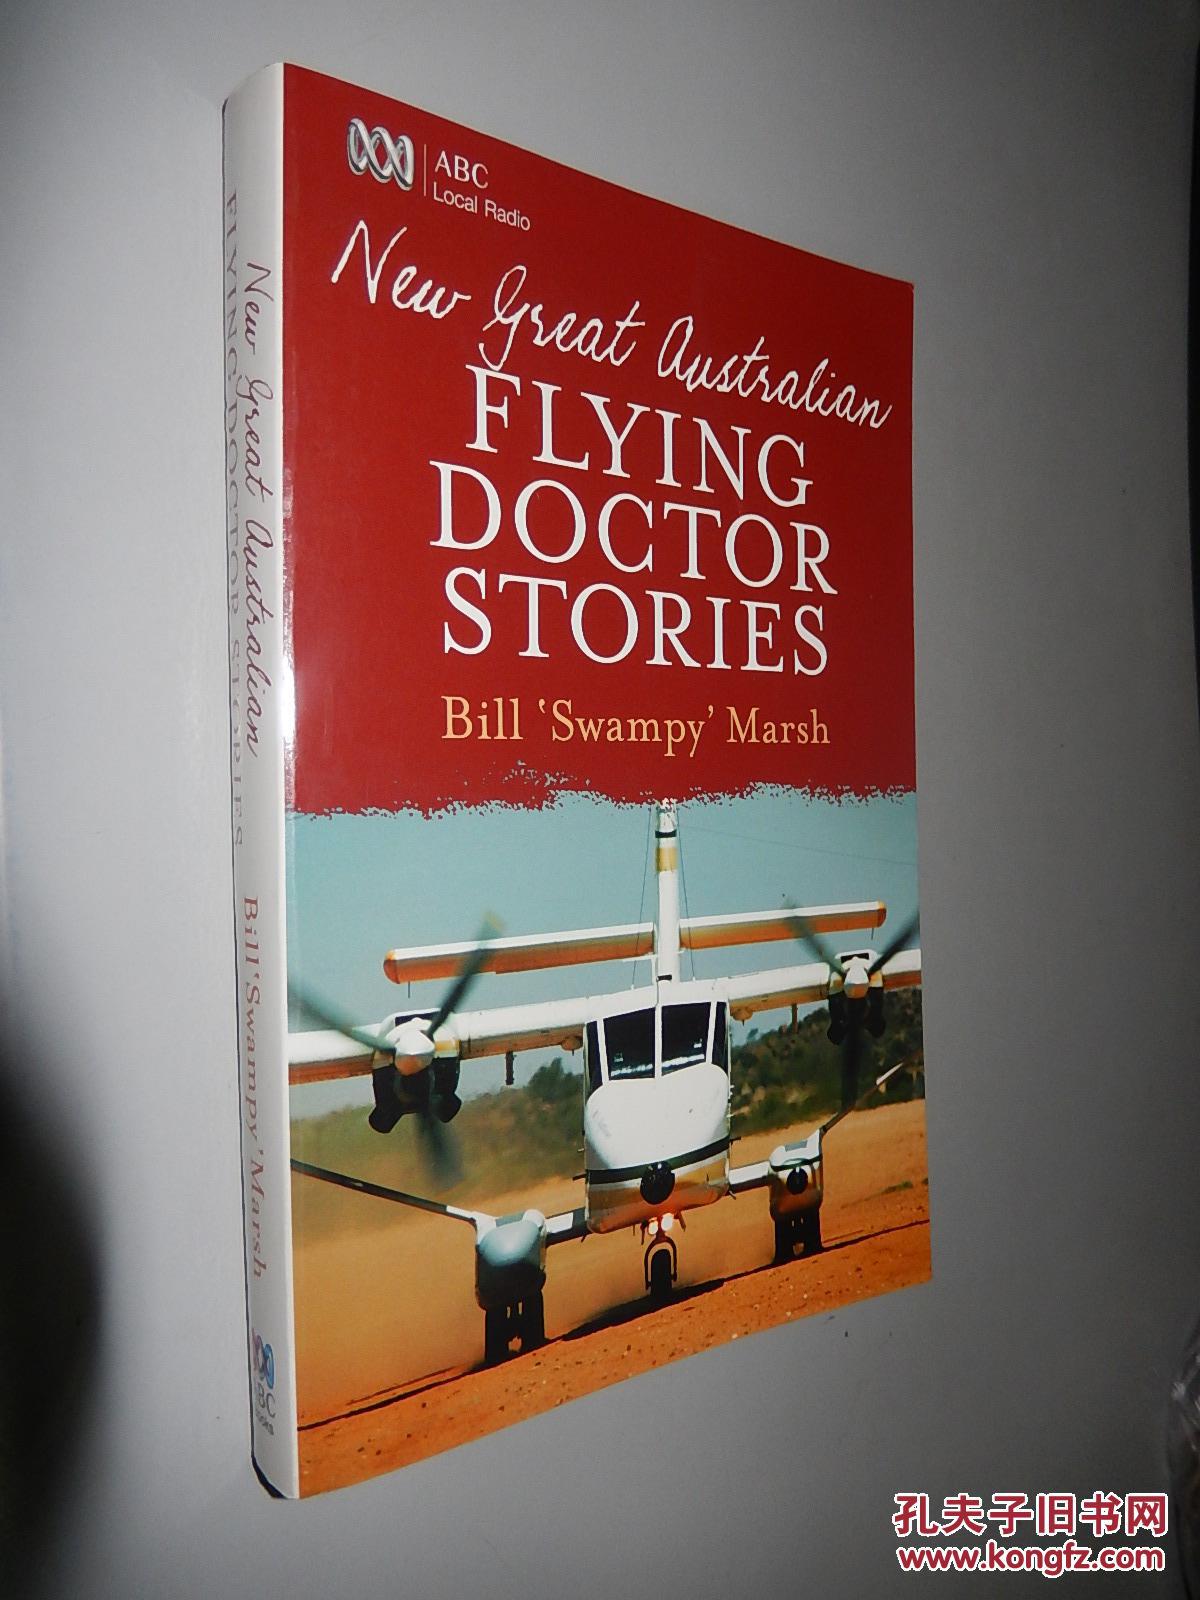 New Great Australian Flying Doctor Stories by Bill Marsh 英文原版 插图本